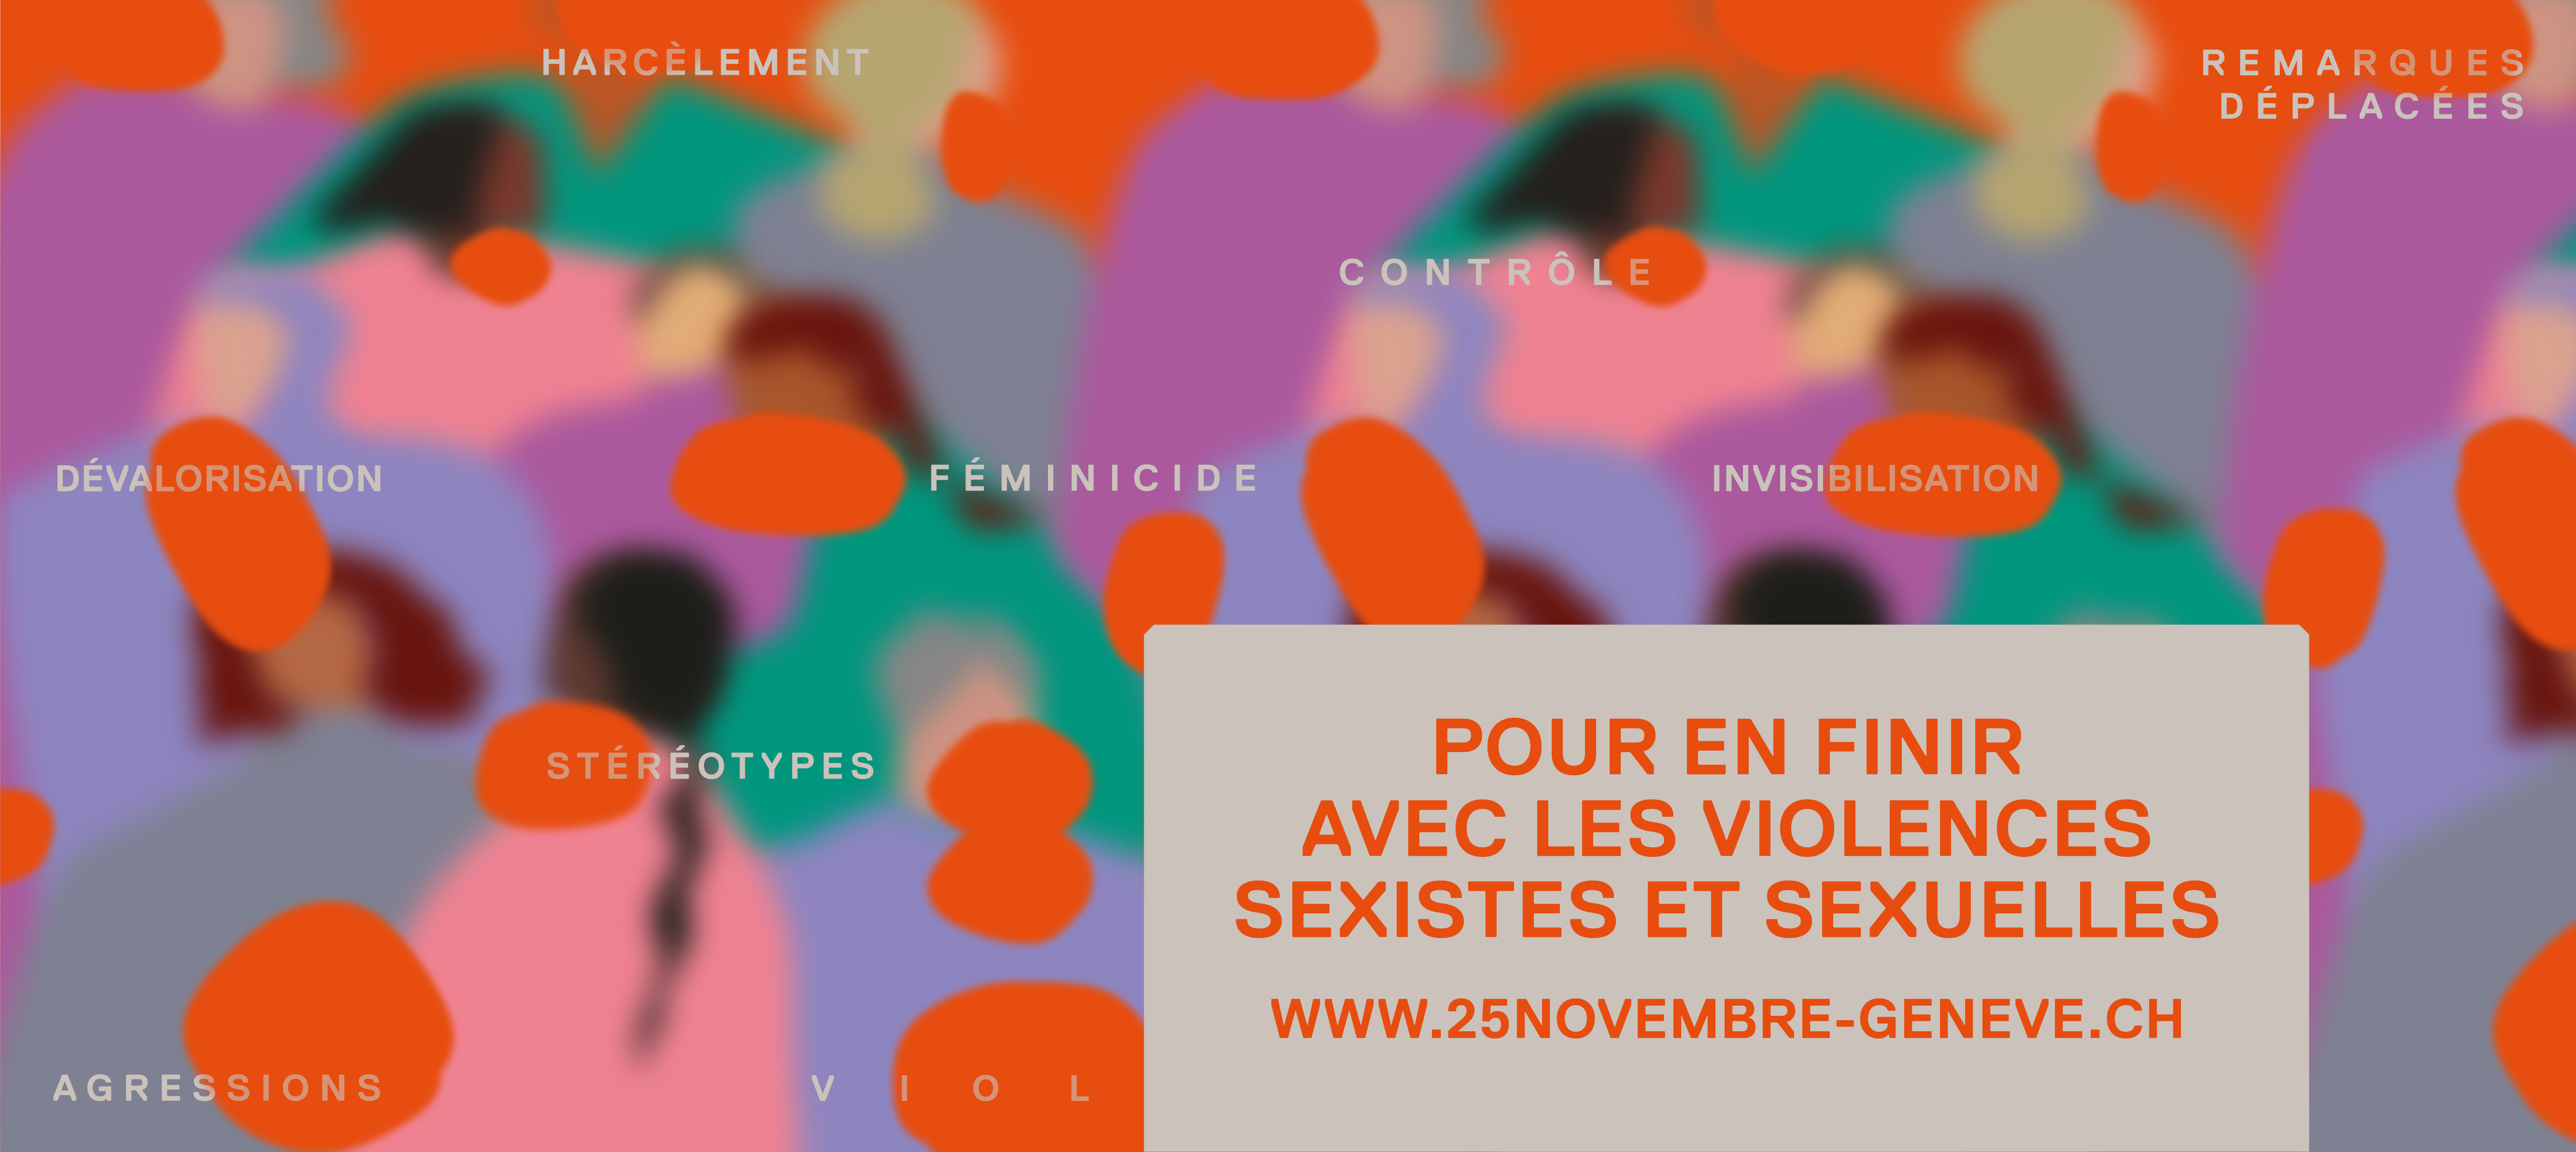 campagne 25 novembre Genève